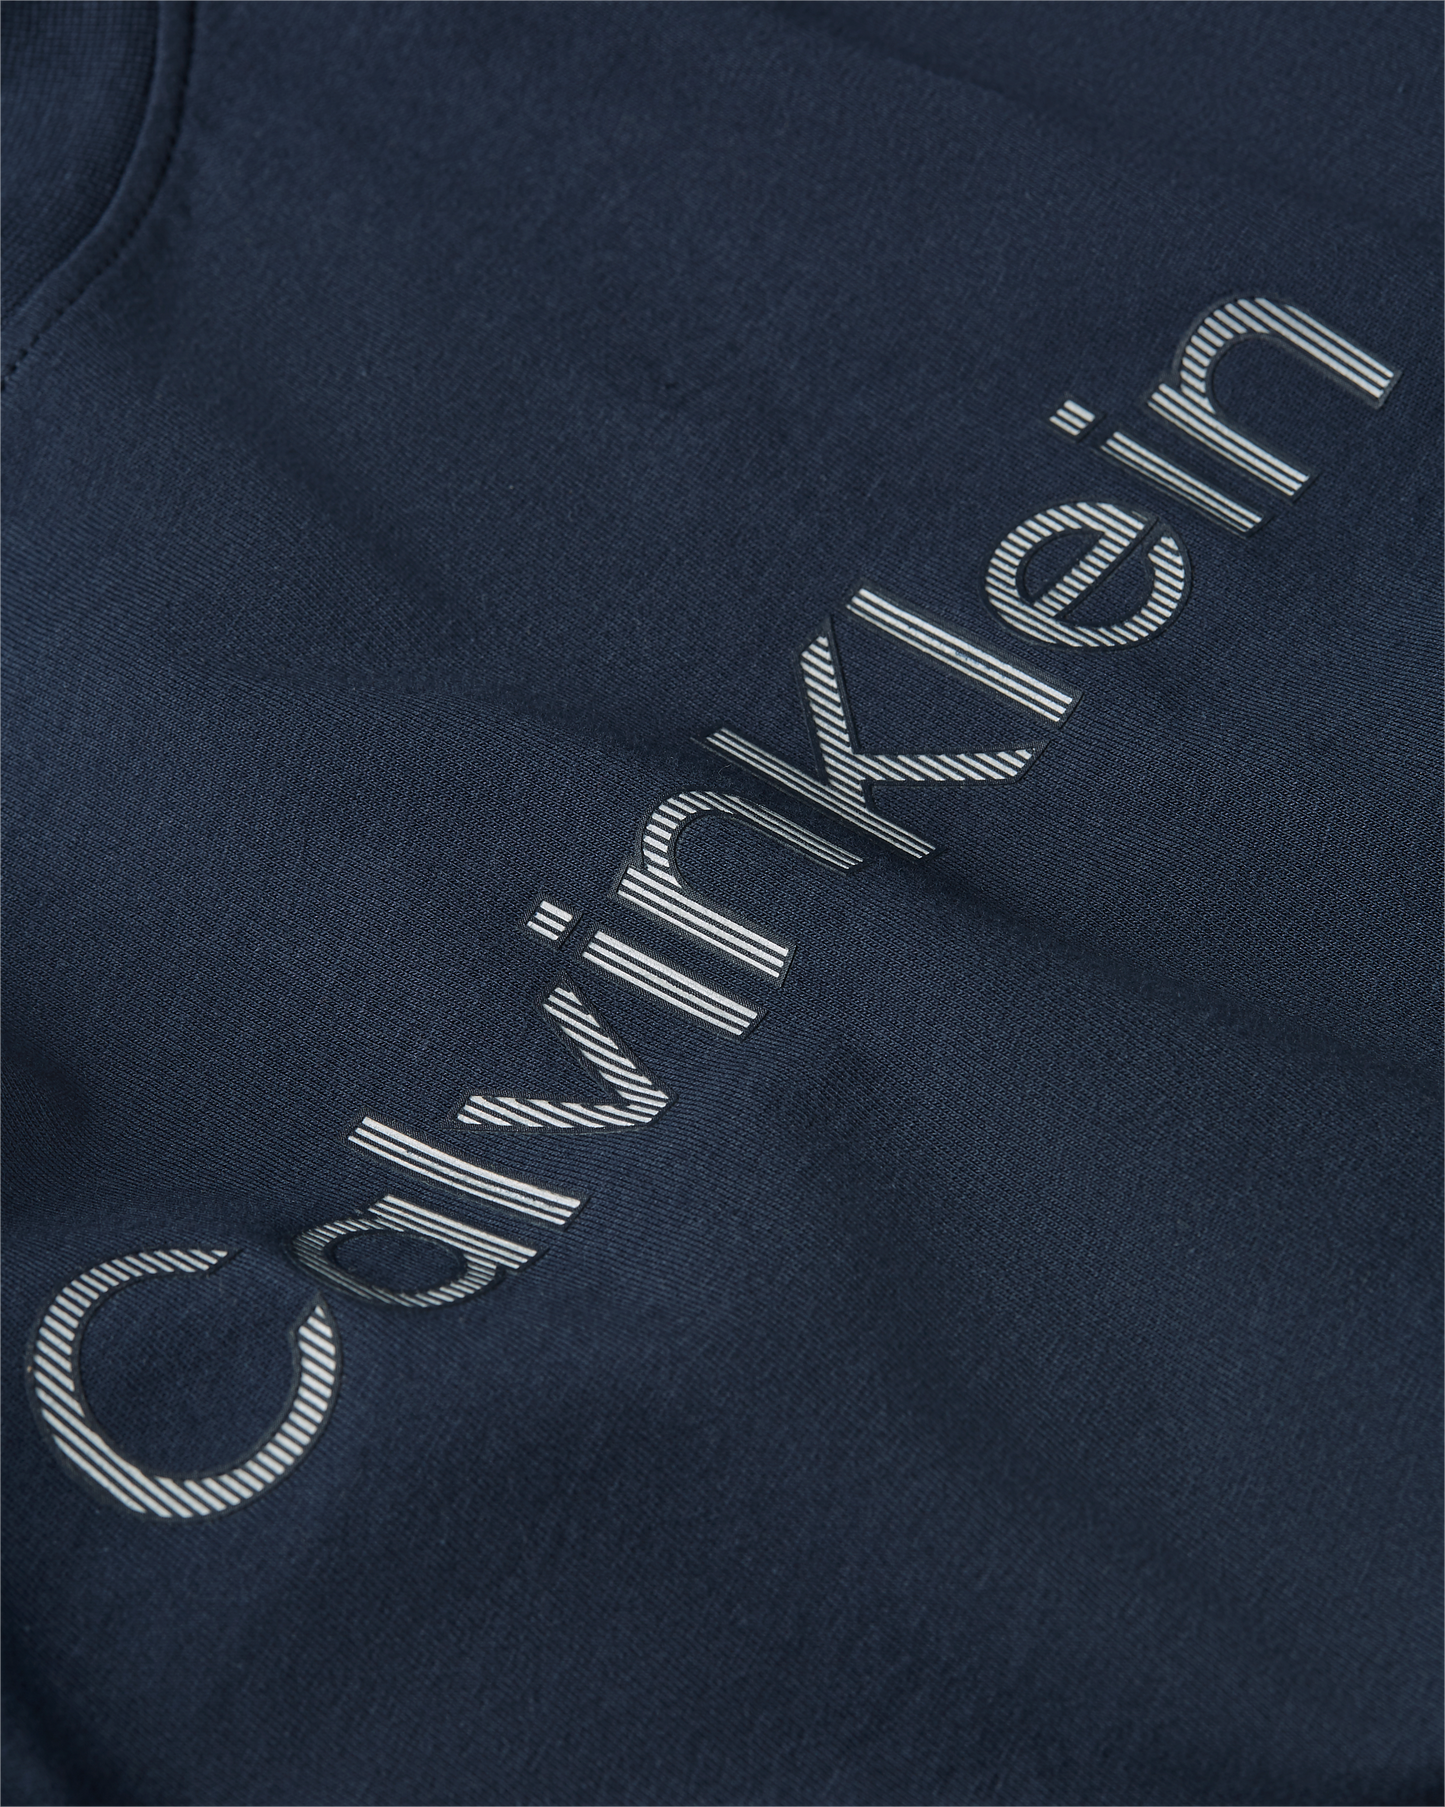 Calvin Klein Organic Cotton Logo T-Shirt K10K108842